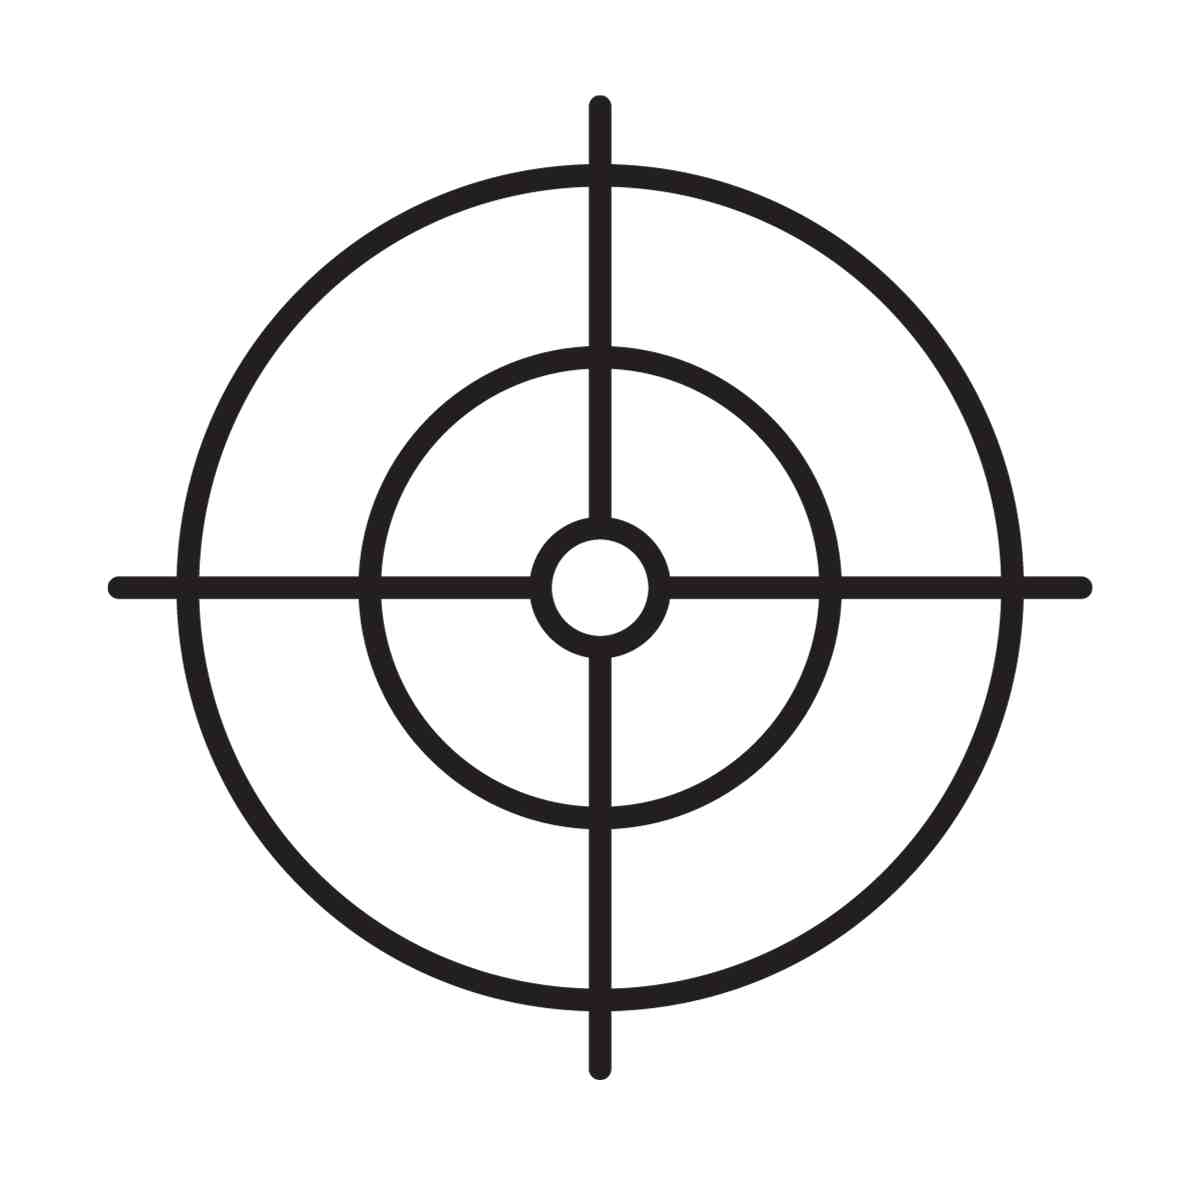 Hunting scope icon